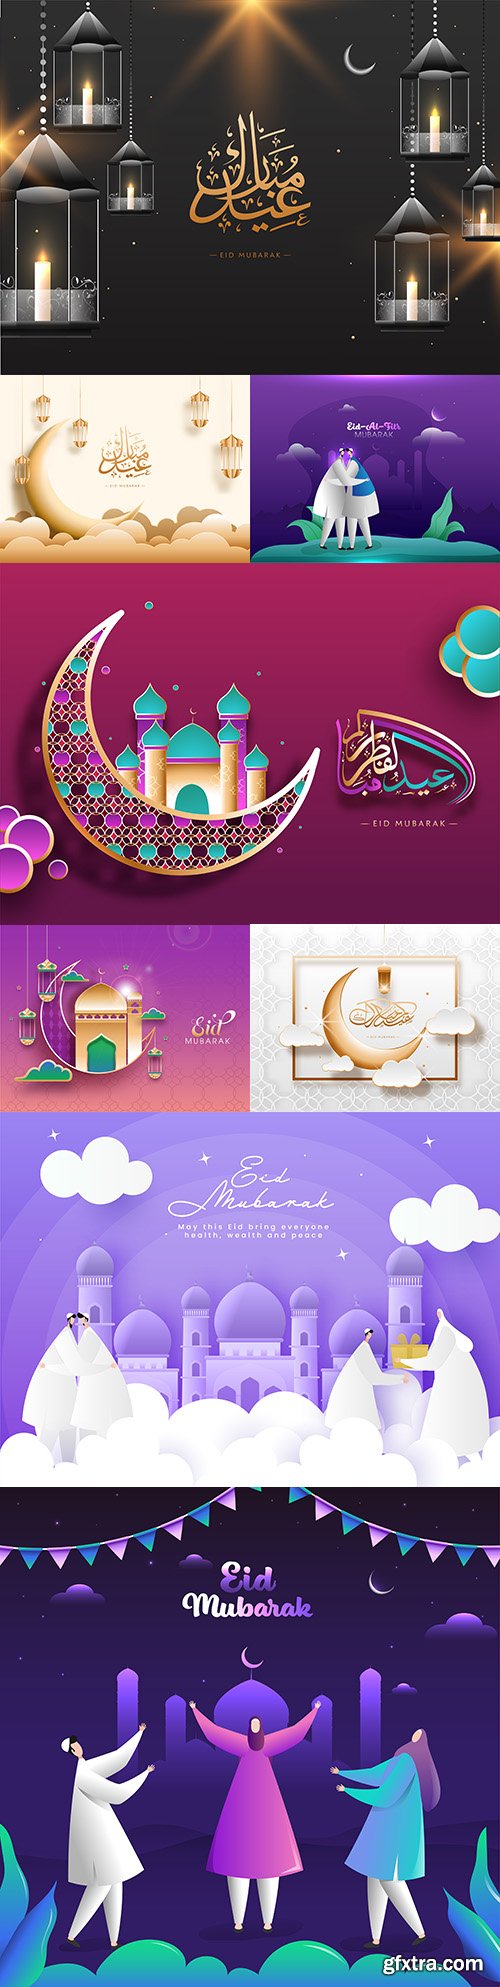 Eid Mubarak Arabic Islamic calligraphic text concept celebration